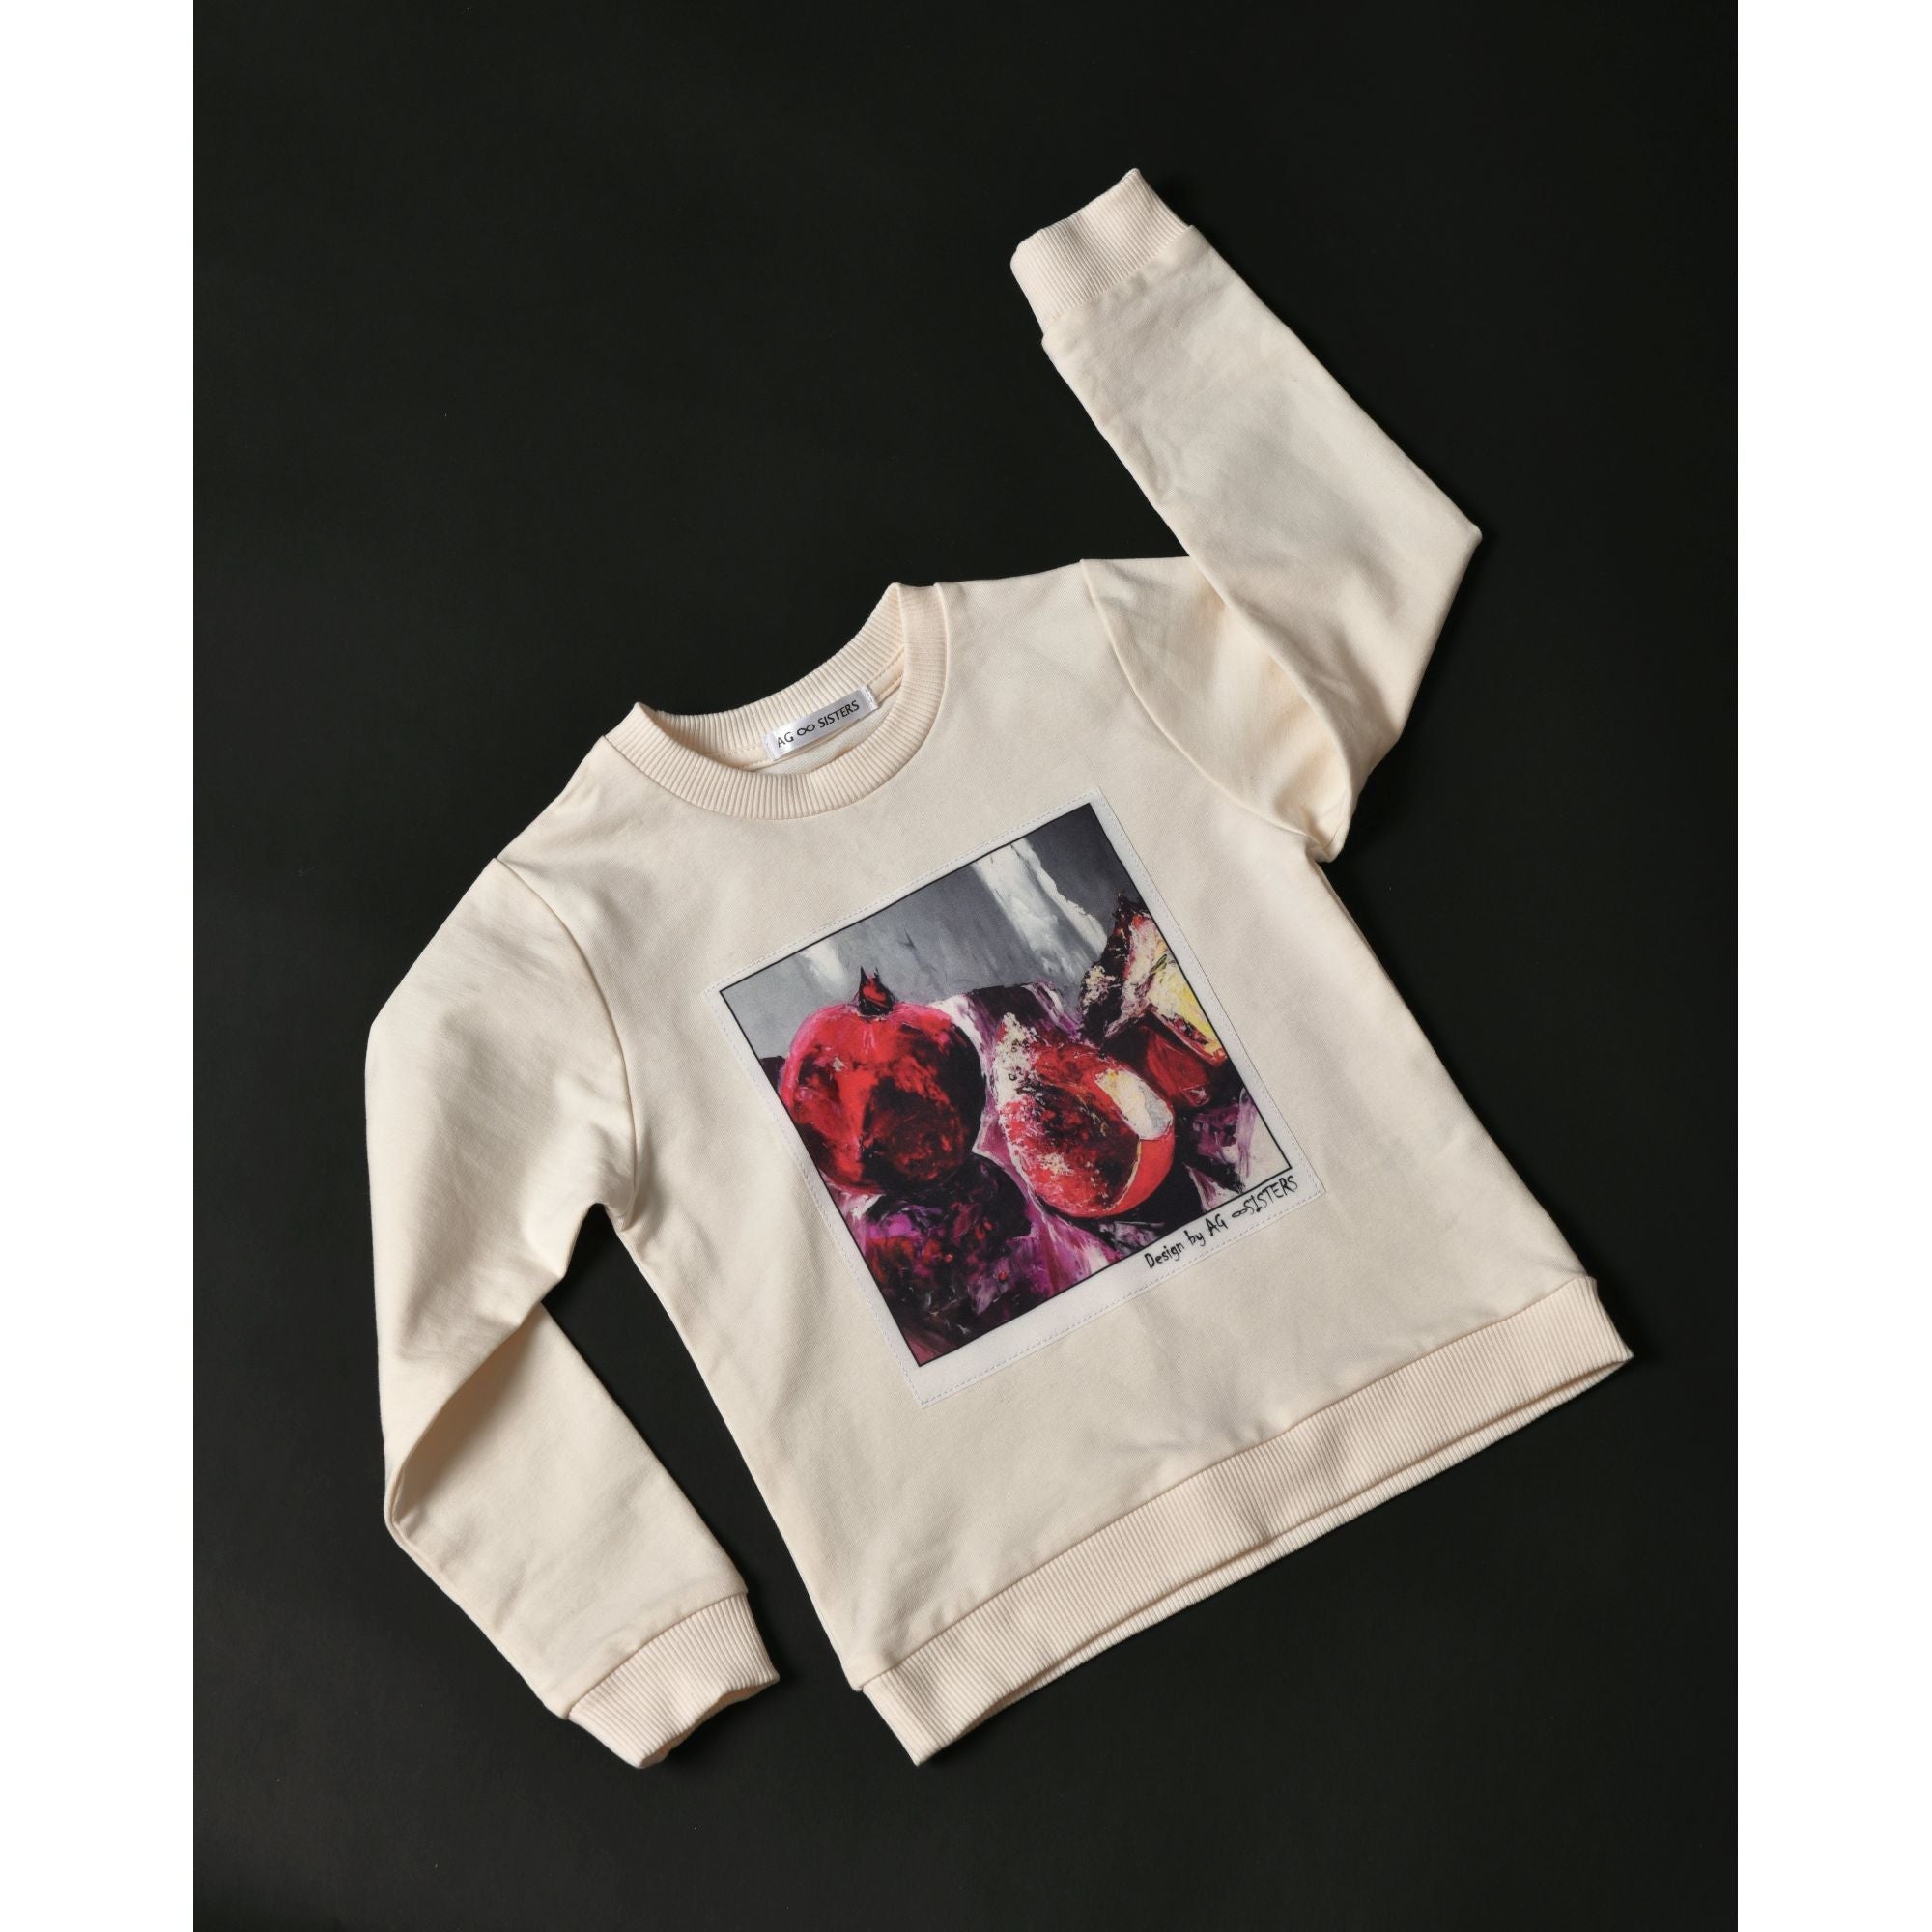 AG Sisters Kids' Sweatshirt with Silk Print "Pomegranate"